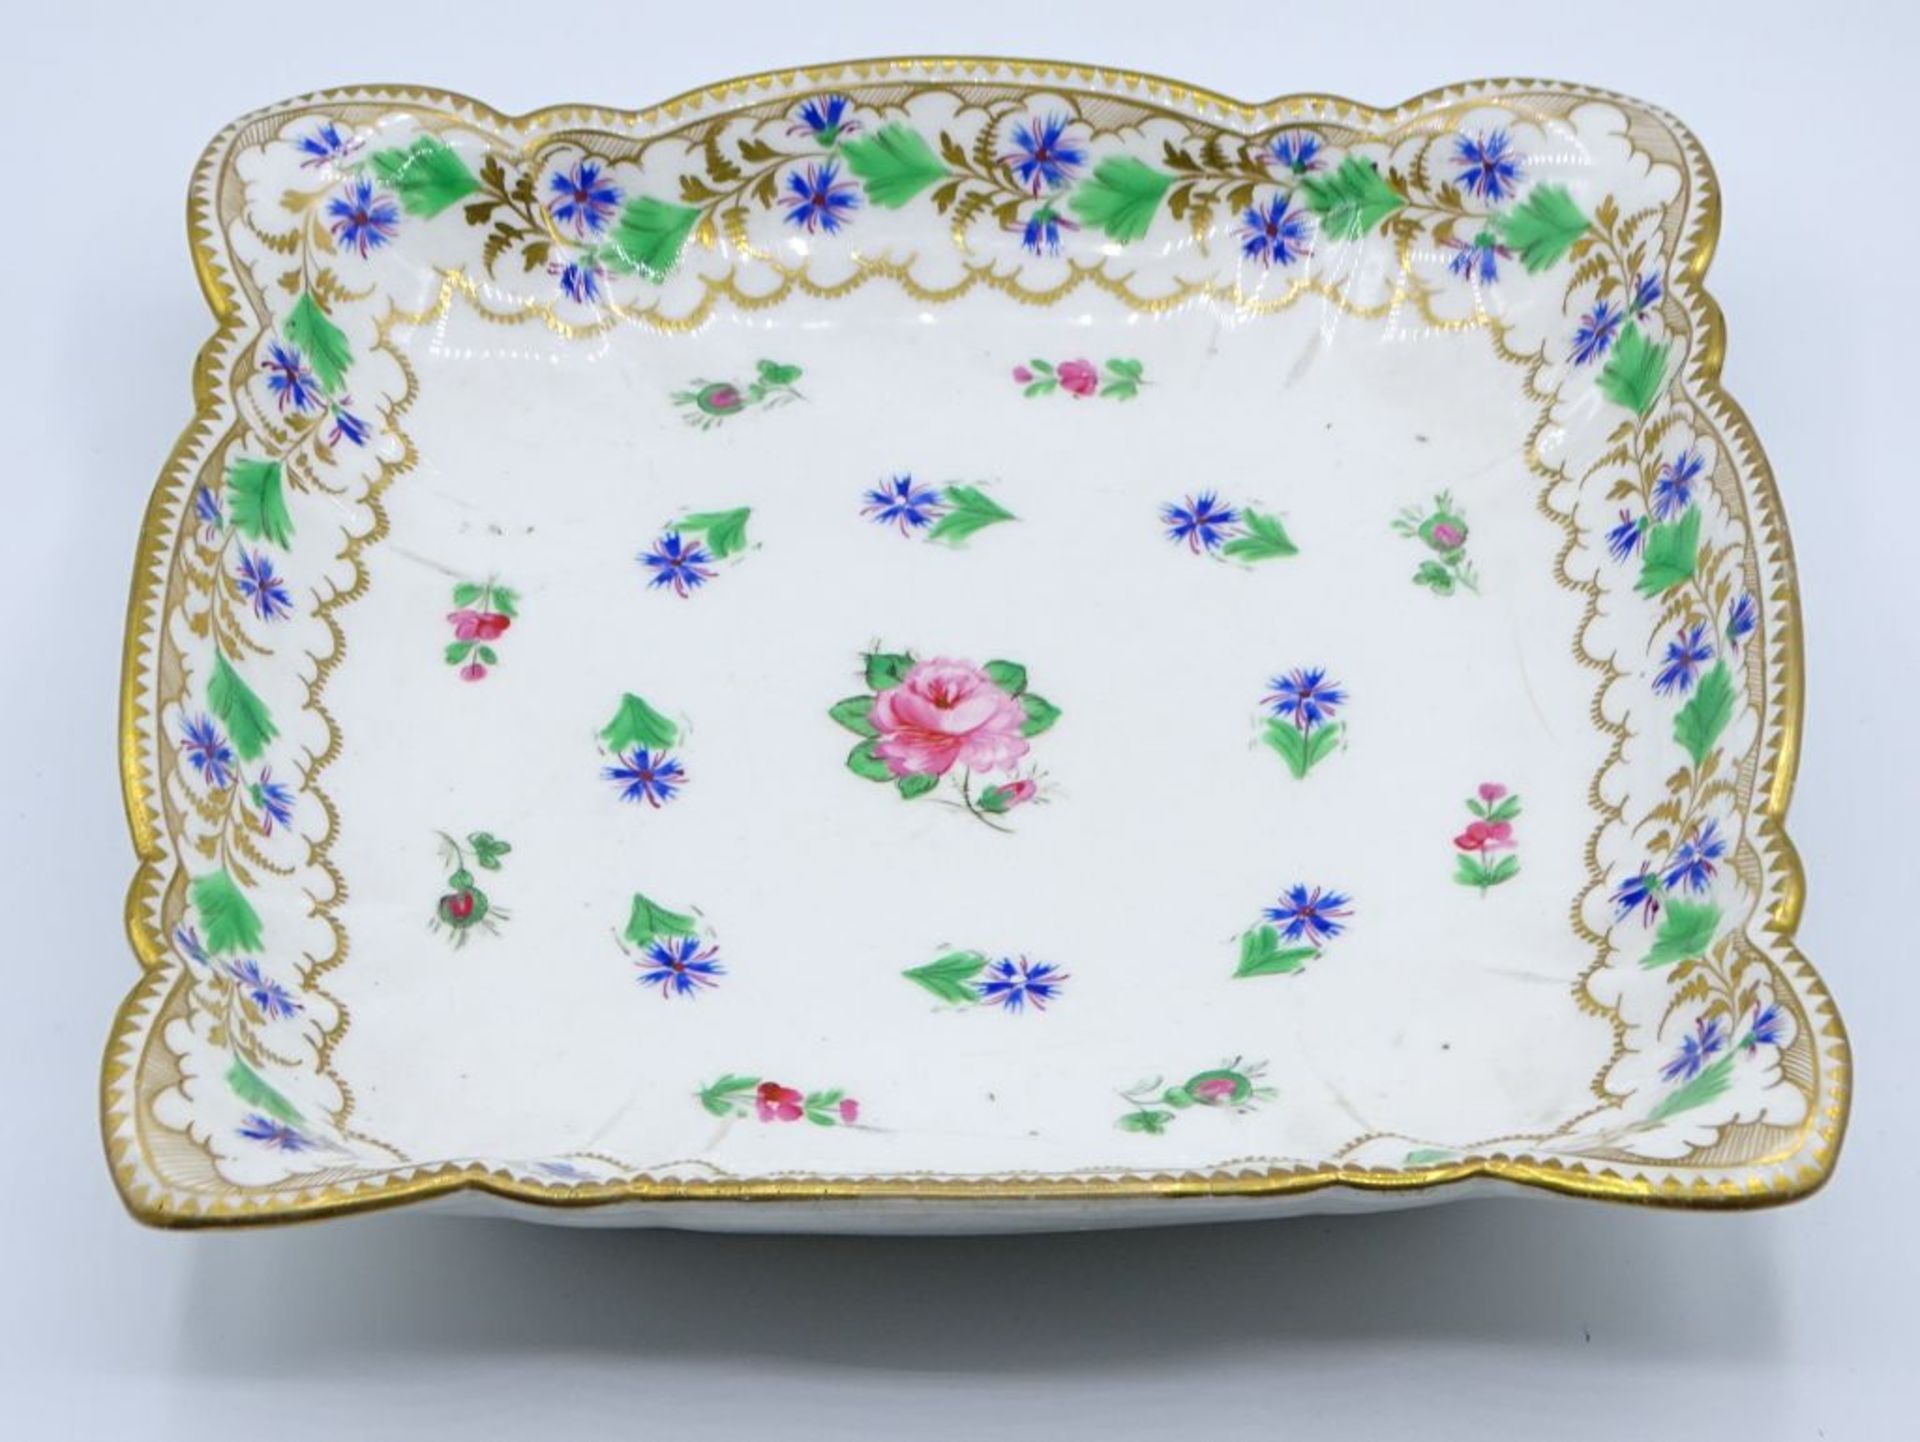 Quadratischer Teller, 19.Jahrhundert, mit Blumen Dekor,Goldrand Bemalung, 21x21cm- - -22.61 %